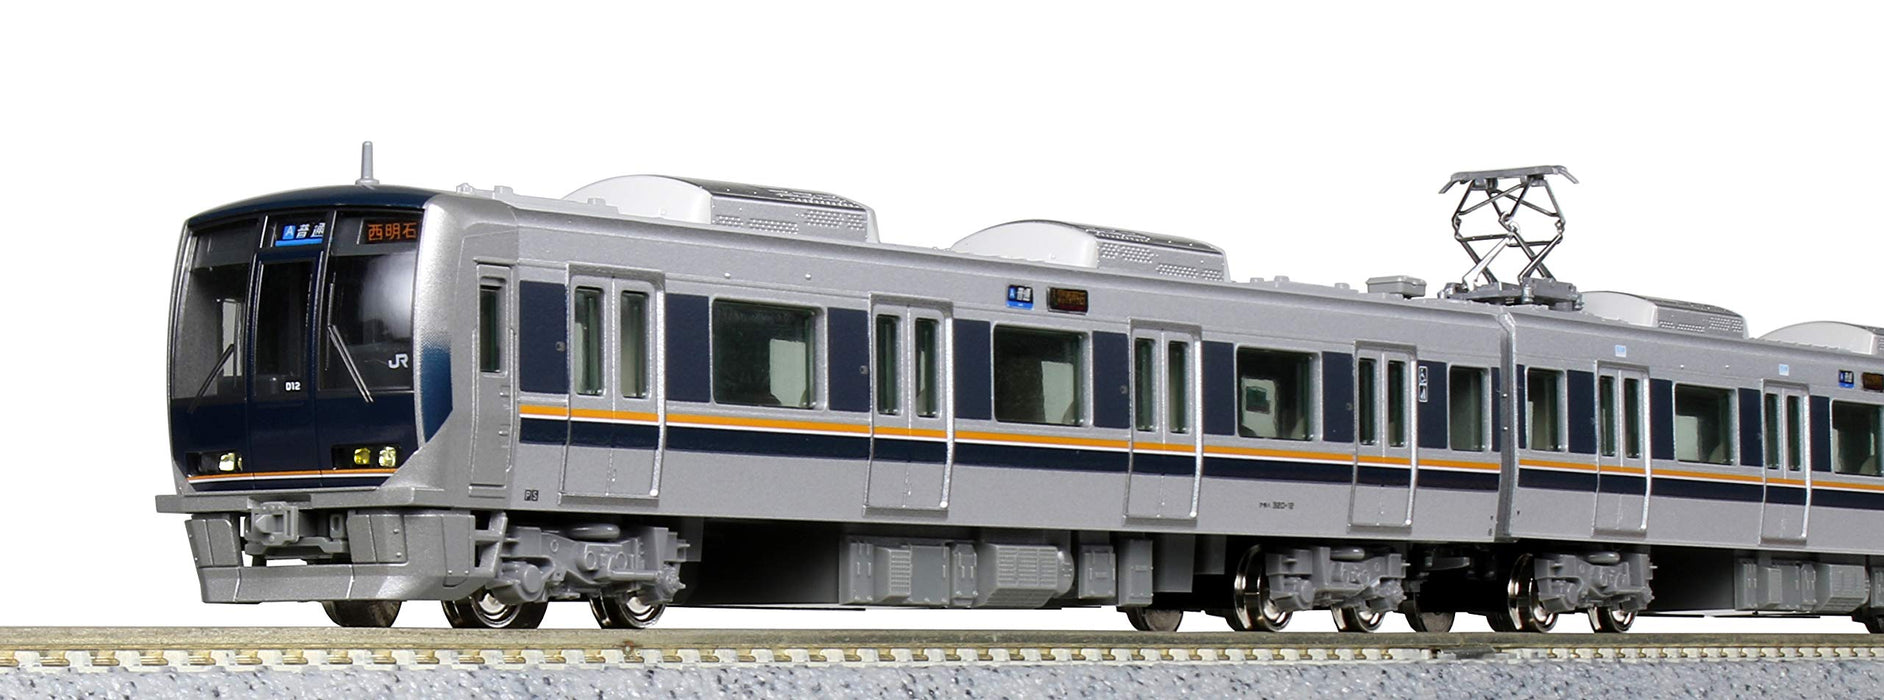 Kato N Gauge 321 Kyoto/Kobe/Tozai 3 Car Set 10-1574 Model Railway Train